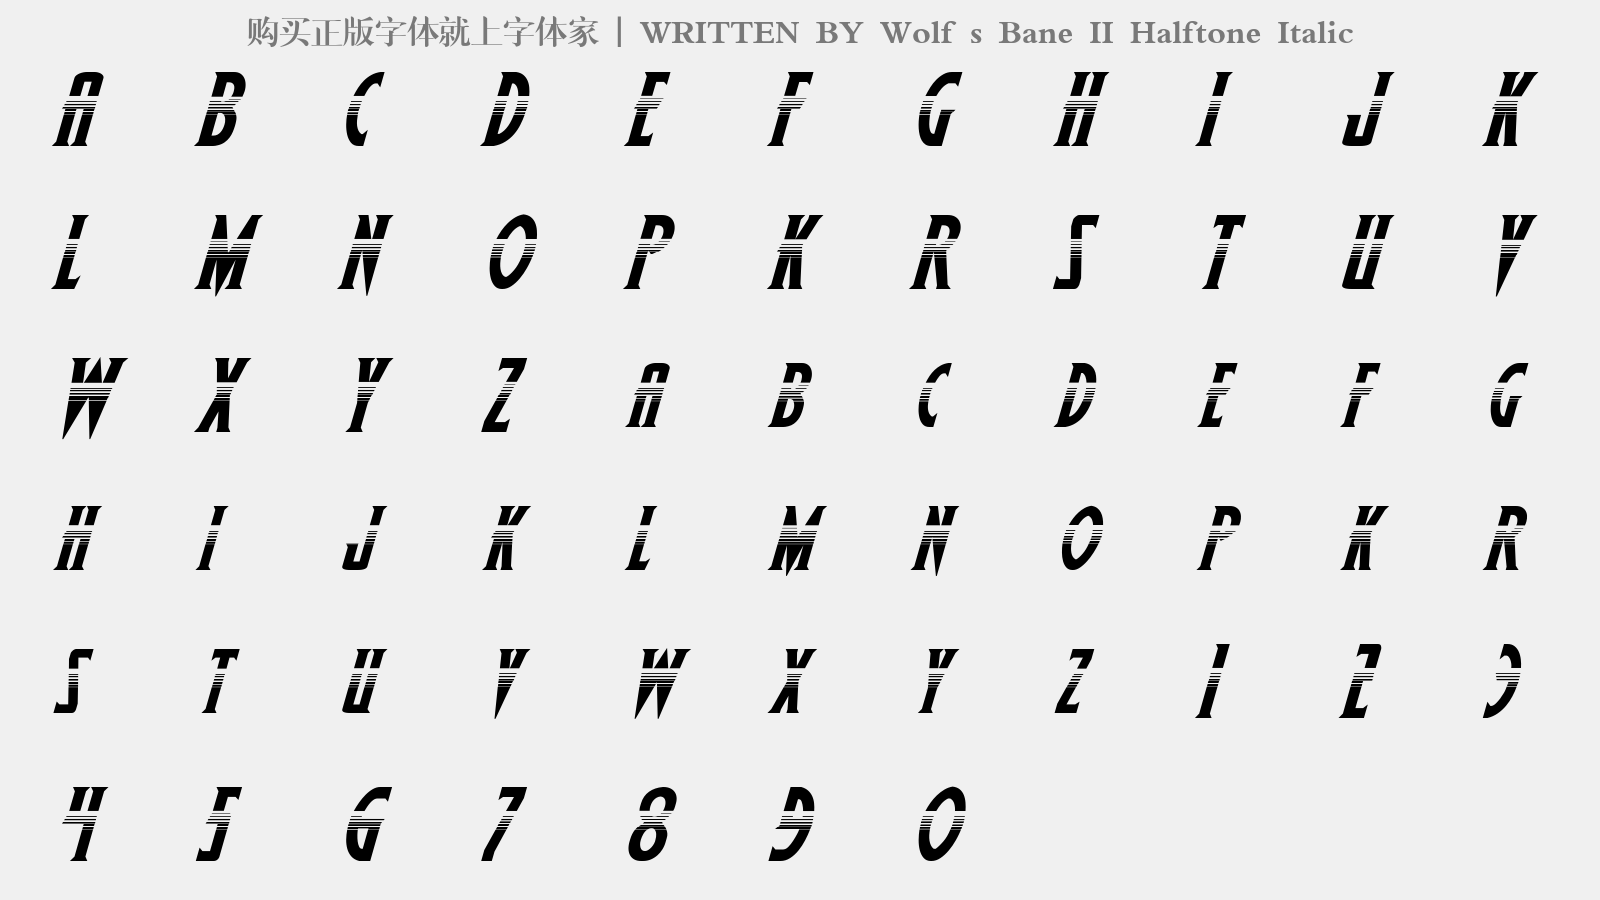 Wolf s Bane II Halftone Italic - 大写字母/小写字母/数字